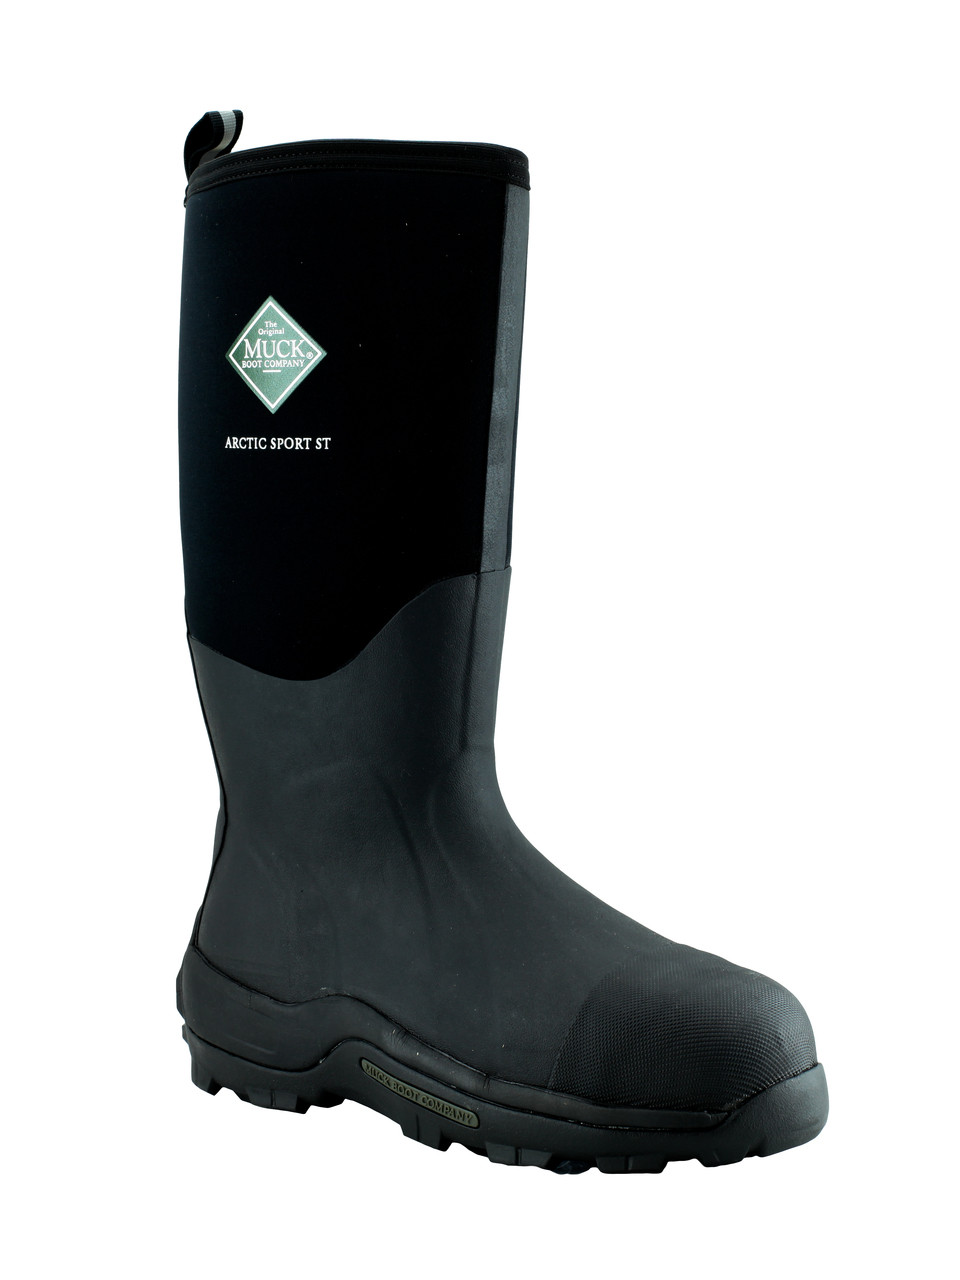 Muck Boots Arctic Sport Steel Toe - ASP 